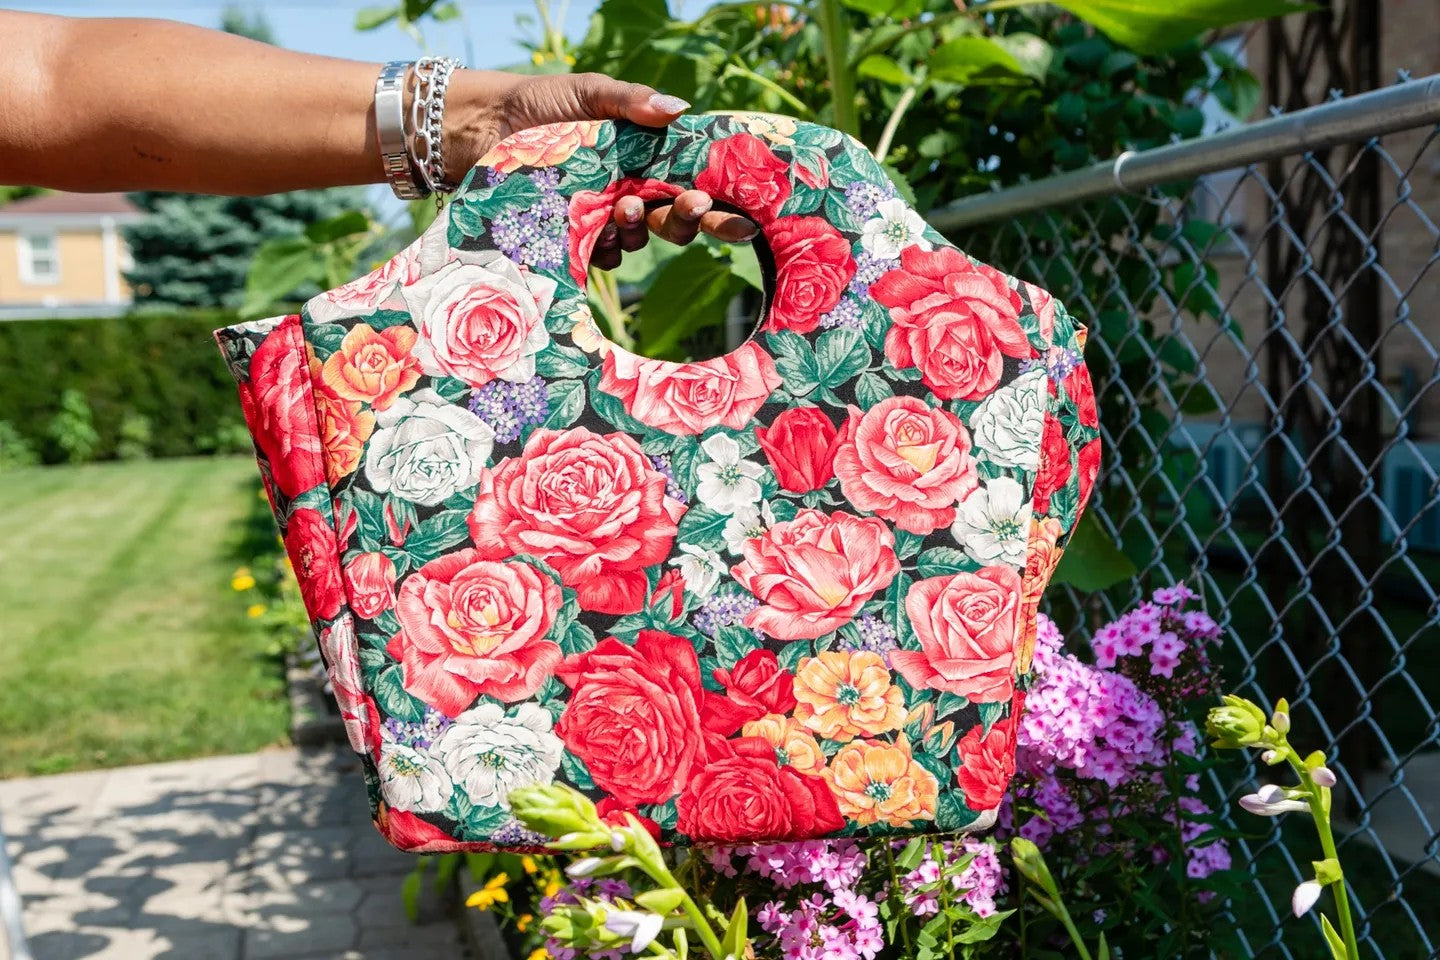 Floral Rose 🌹 Print women Bag. Good size multifunction. Dress up or casual. Handmade in Haïti